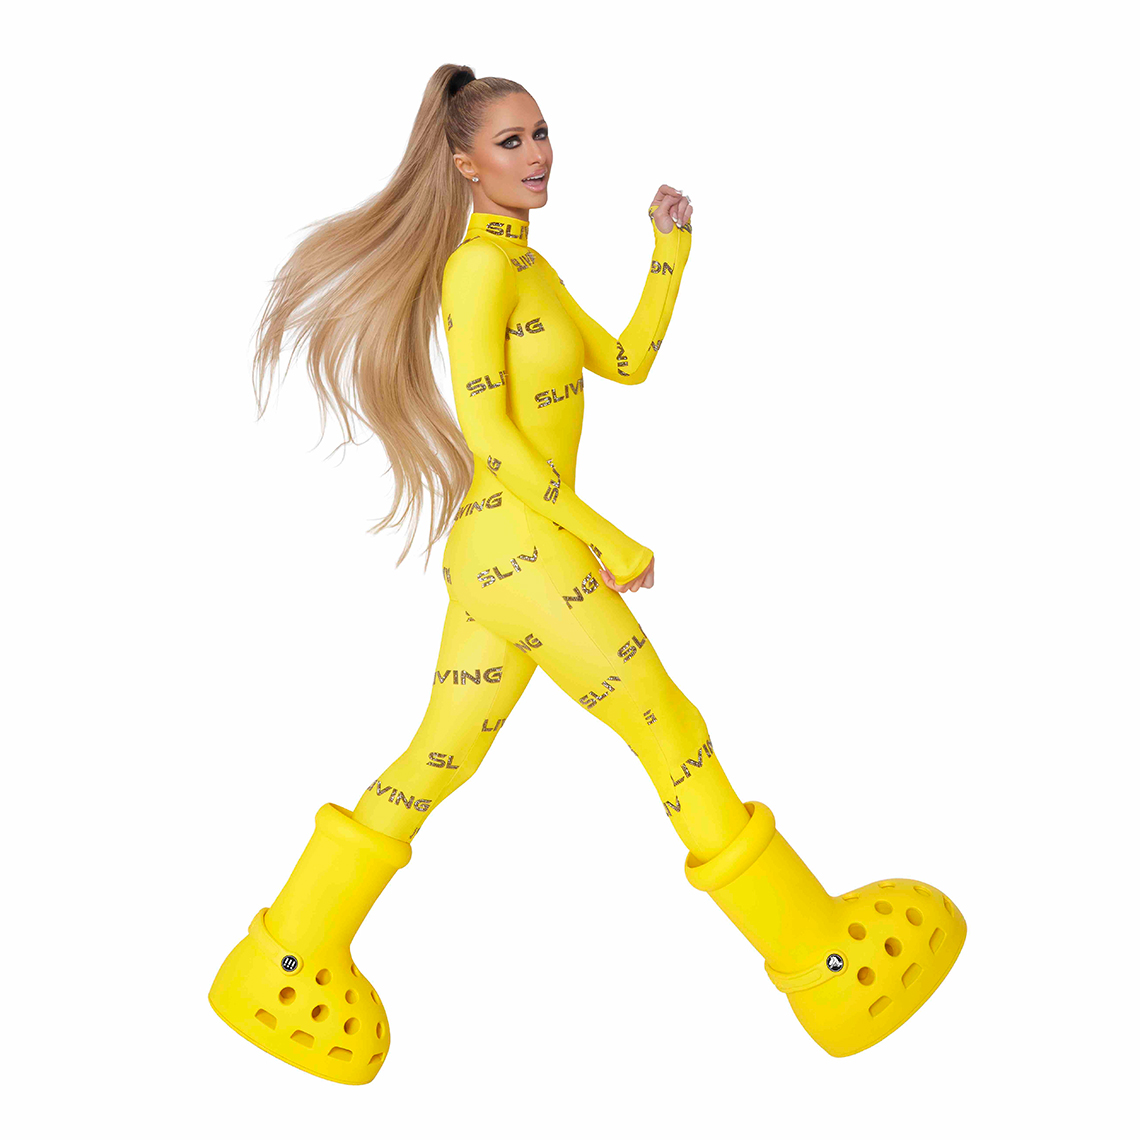 Paris Hilton Mschf Pizzaslime Crocs Big Red Boot Yellow 2